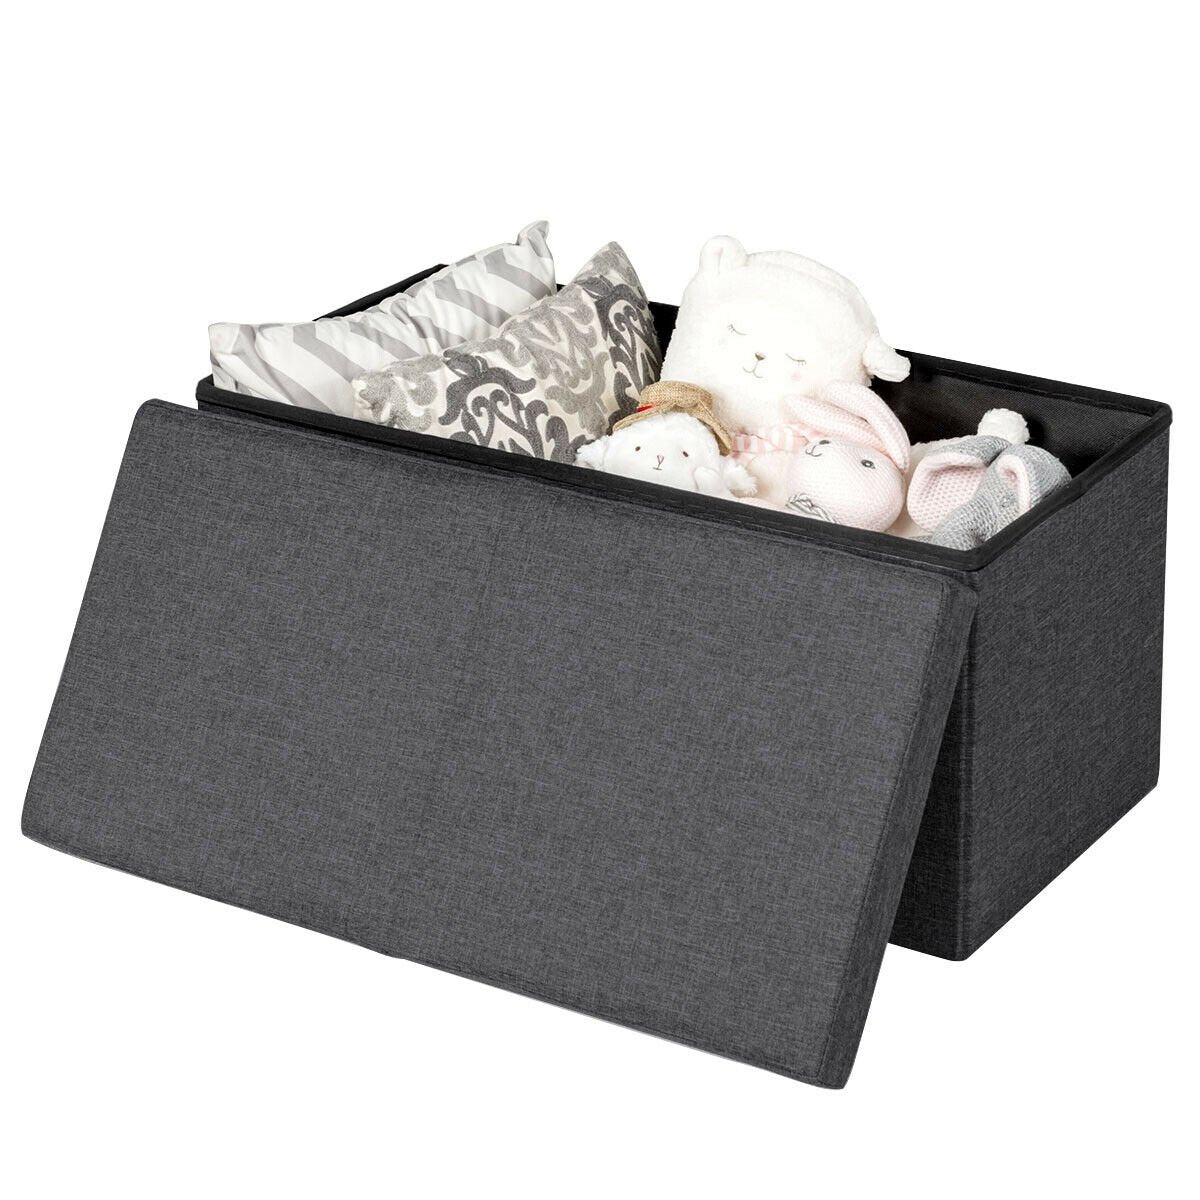 30 Inch Folding Storage Ottoman with Lift Top, Dark Gray